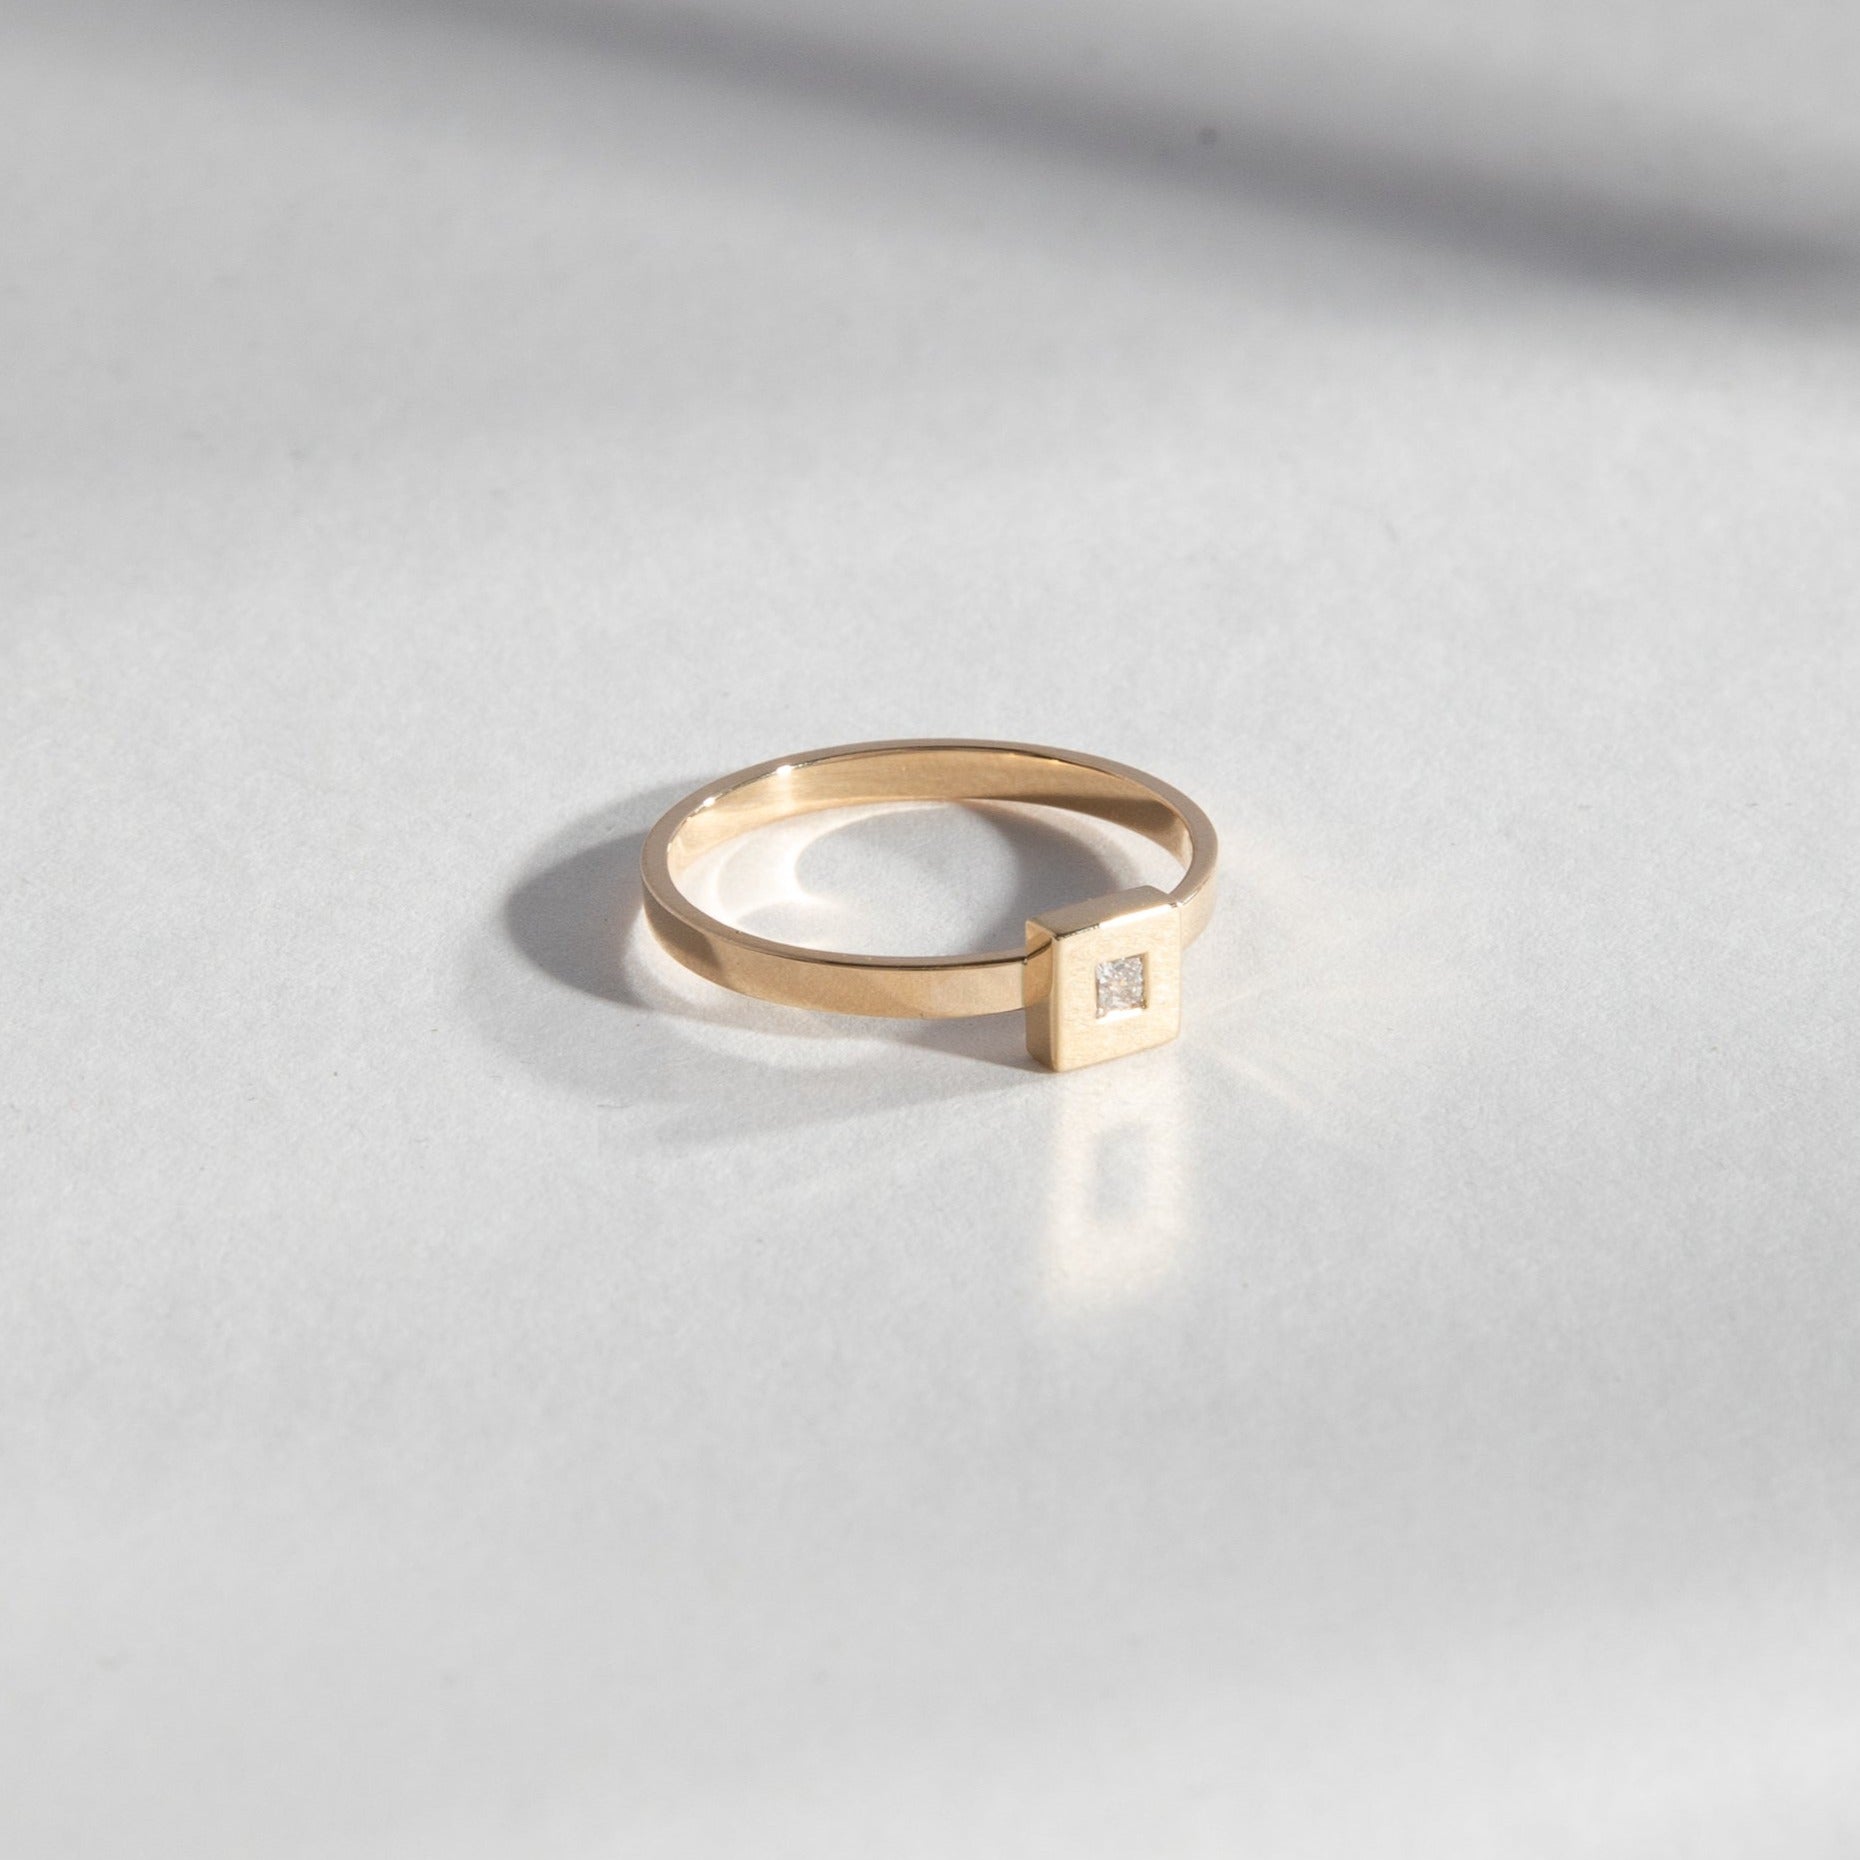 Sada Handmade Ring in 14k Gold set with lab-grown diamonds By SHW Fine Jewelry NYC